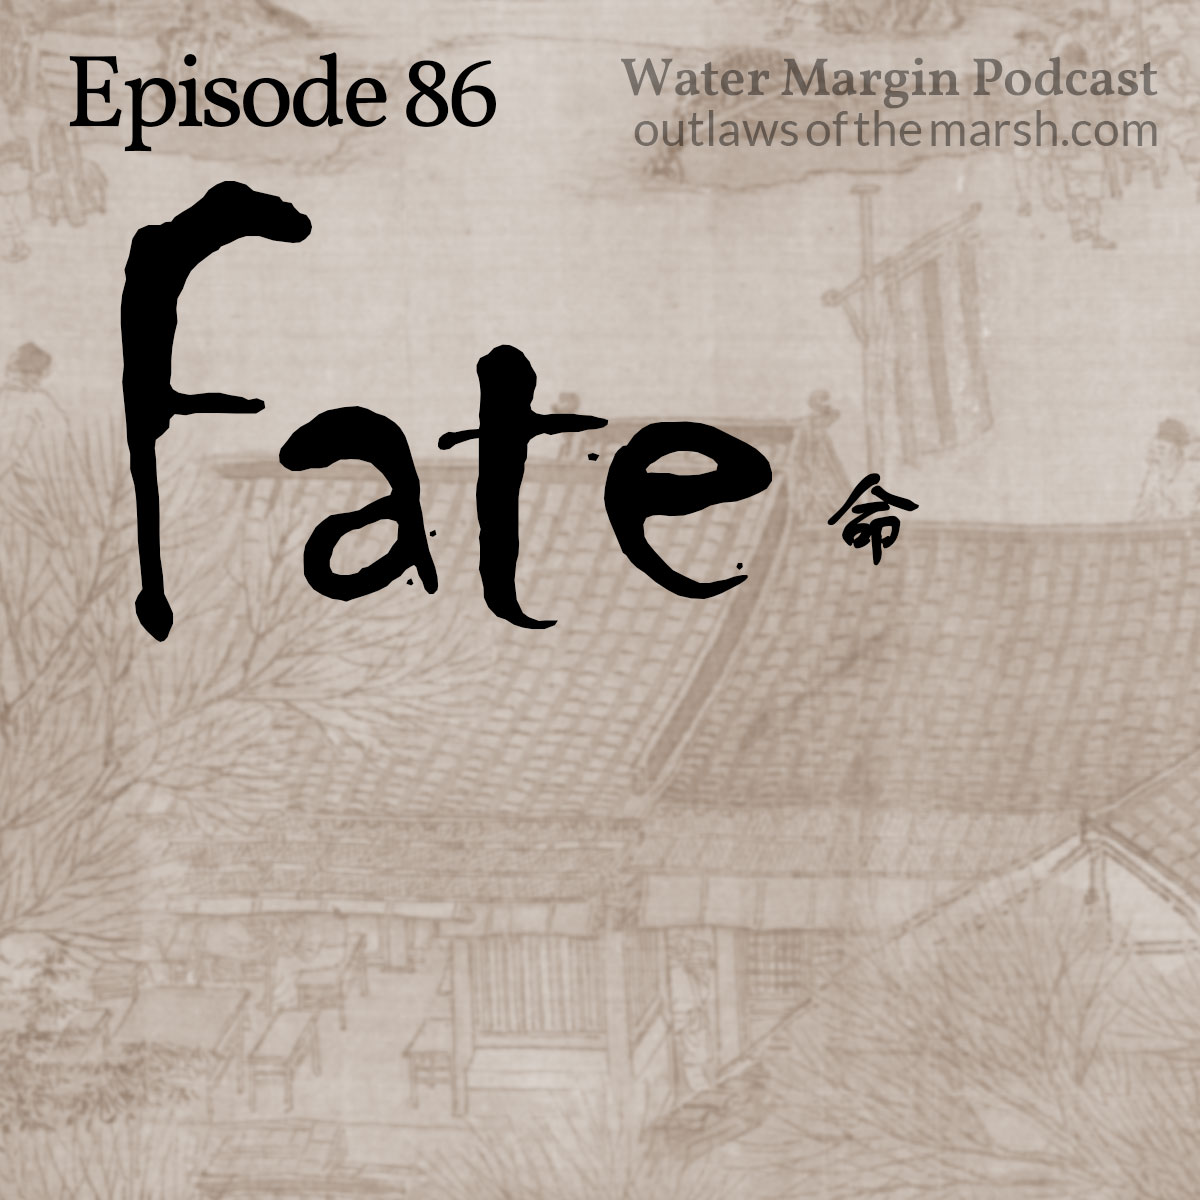 Water Margin Podcast: Episode 086